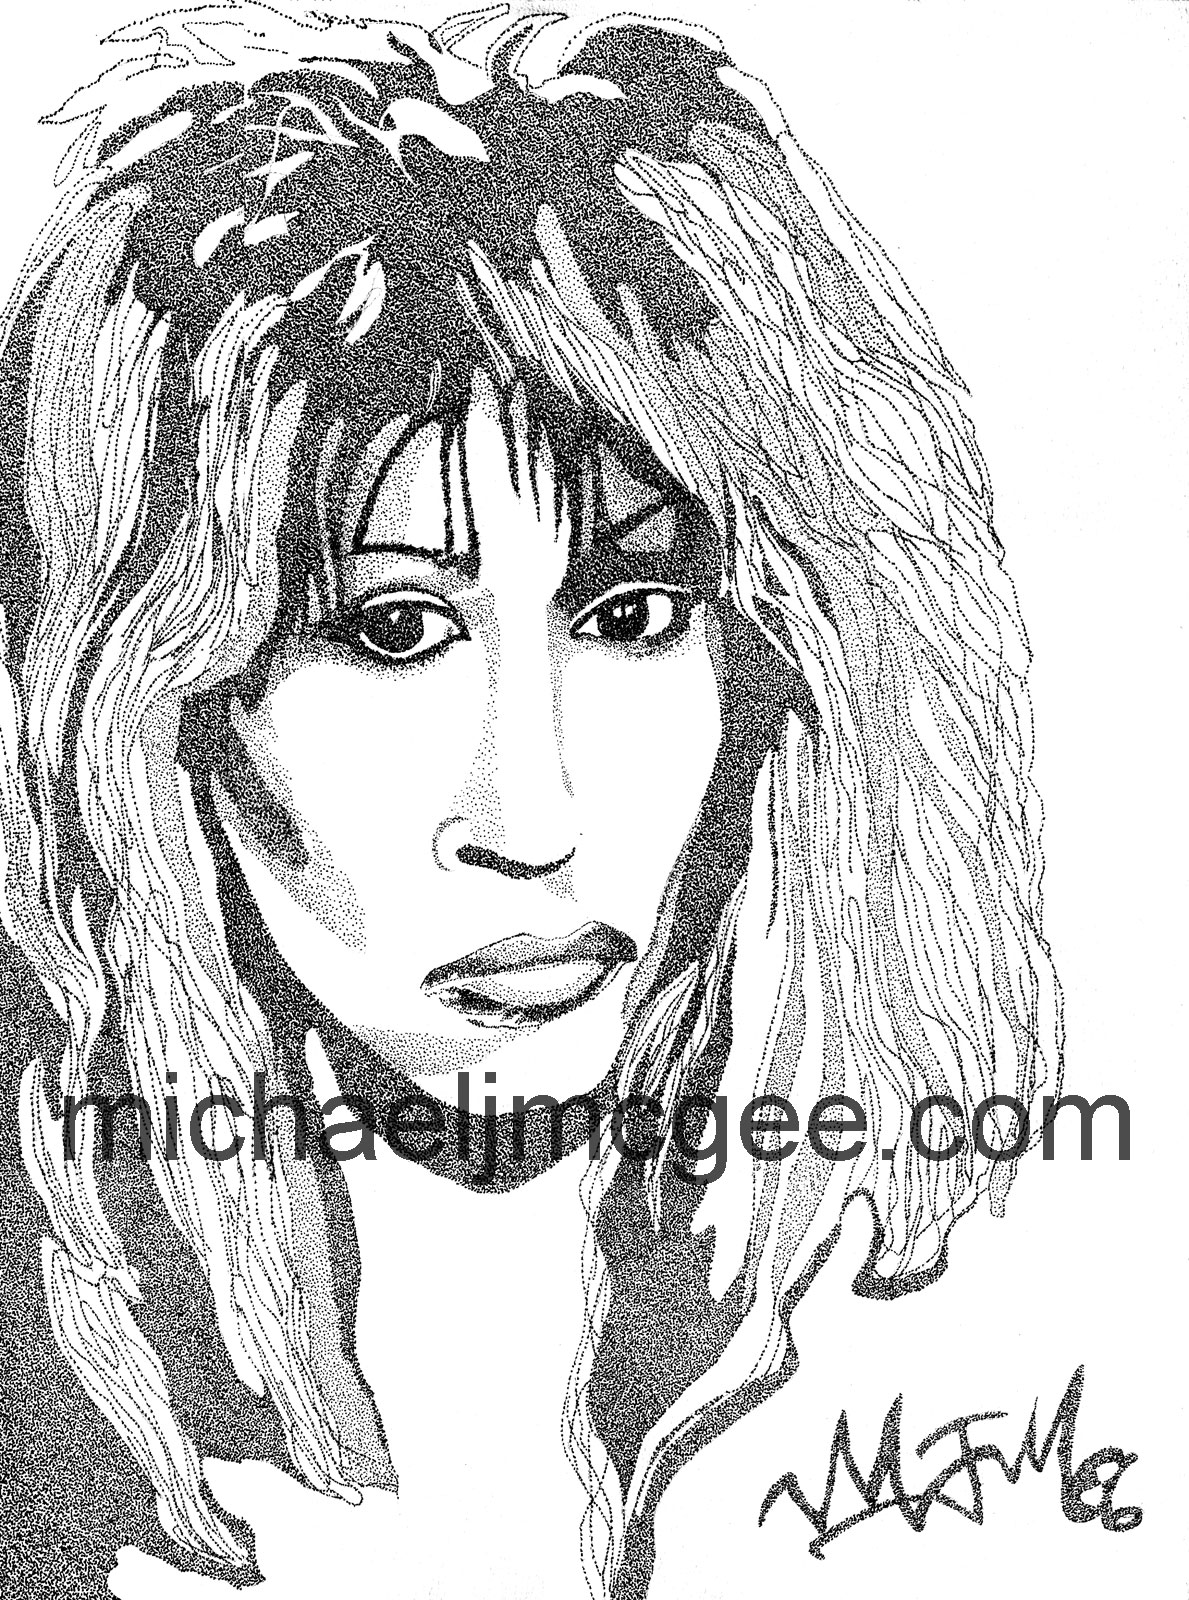 Tina Turner / MJM Artworks / michaeljmcgee.com